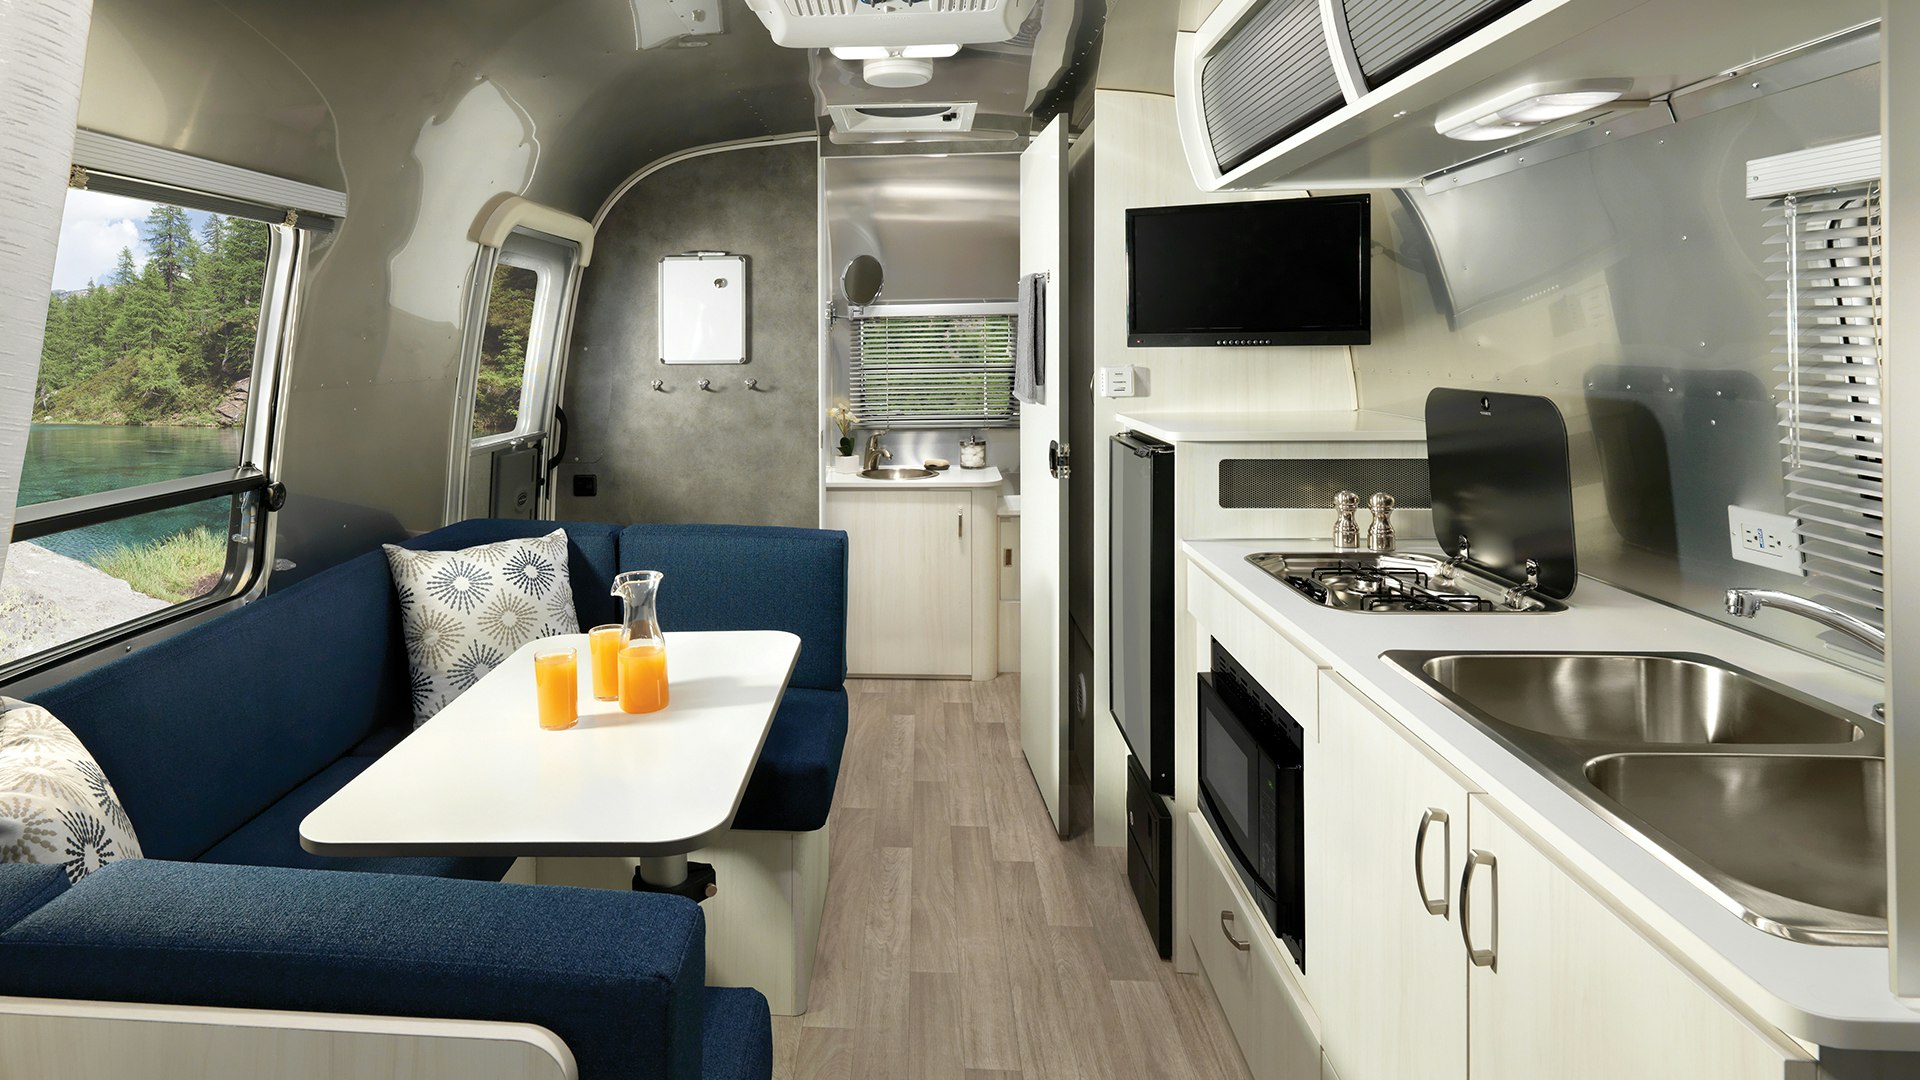 Airstream Bambi Lightweight Camper Trailer Small RV Travel Trailer